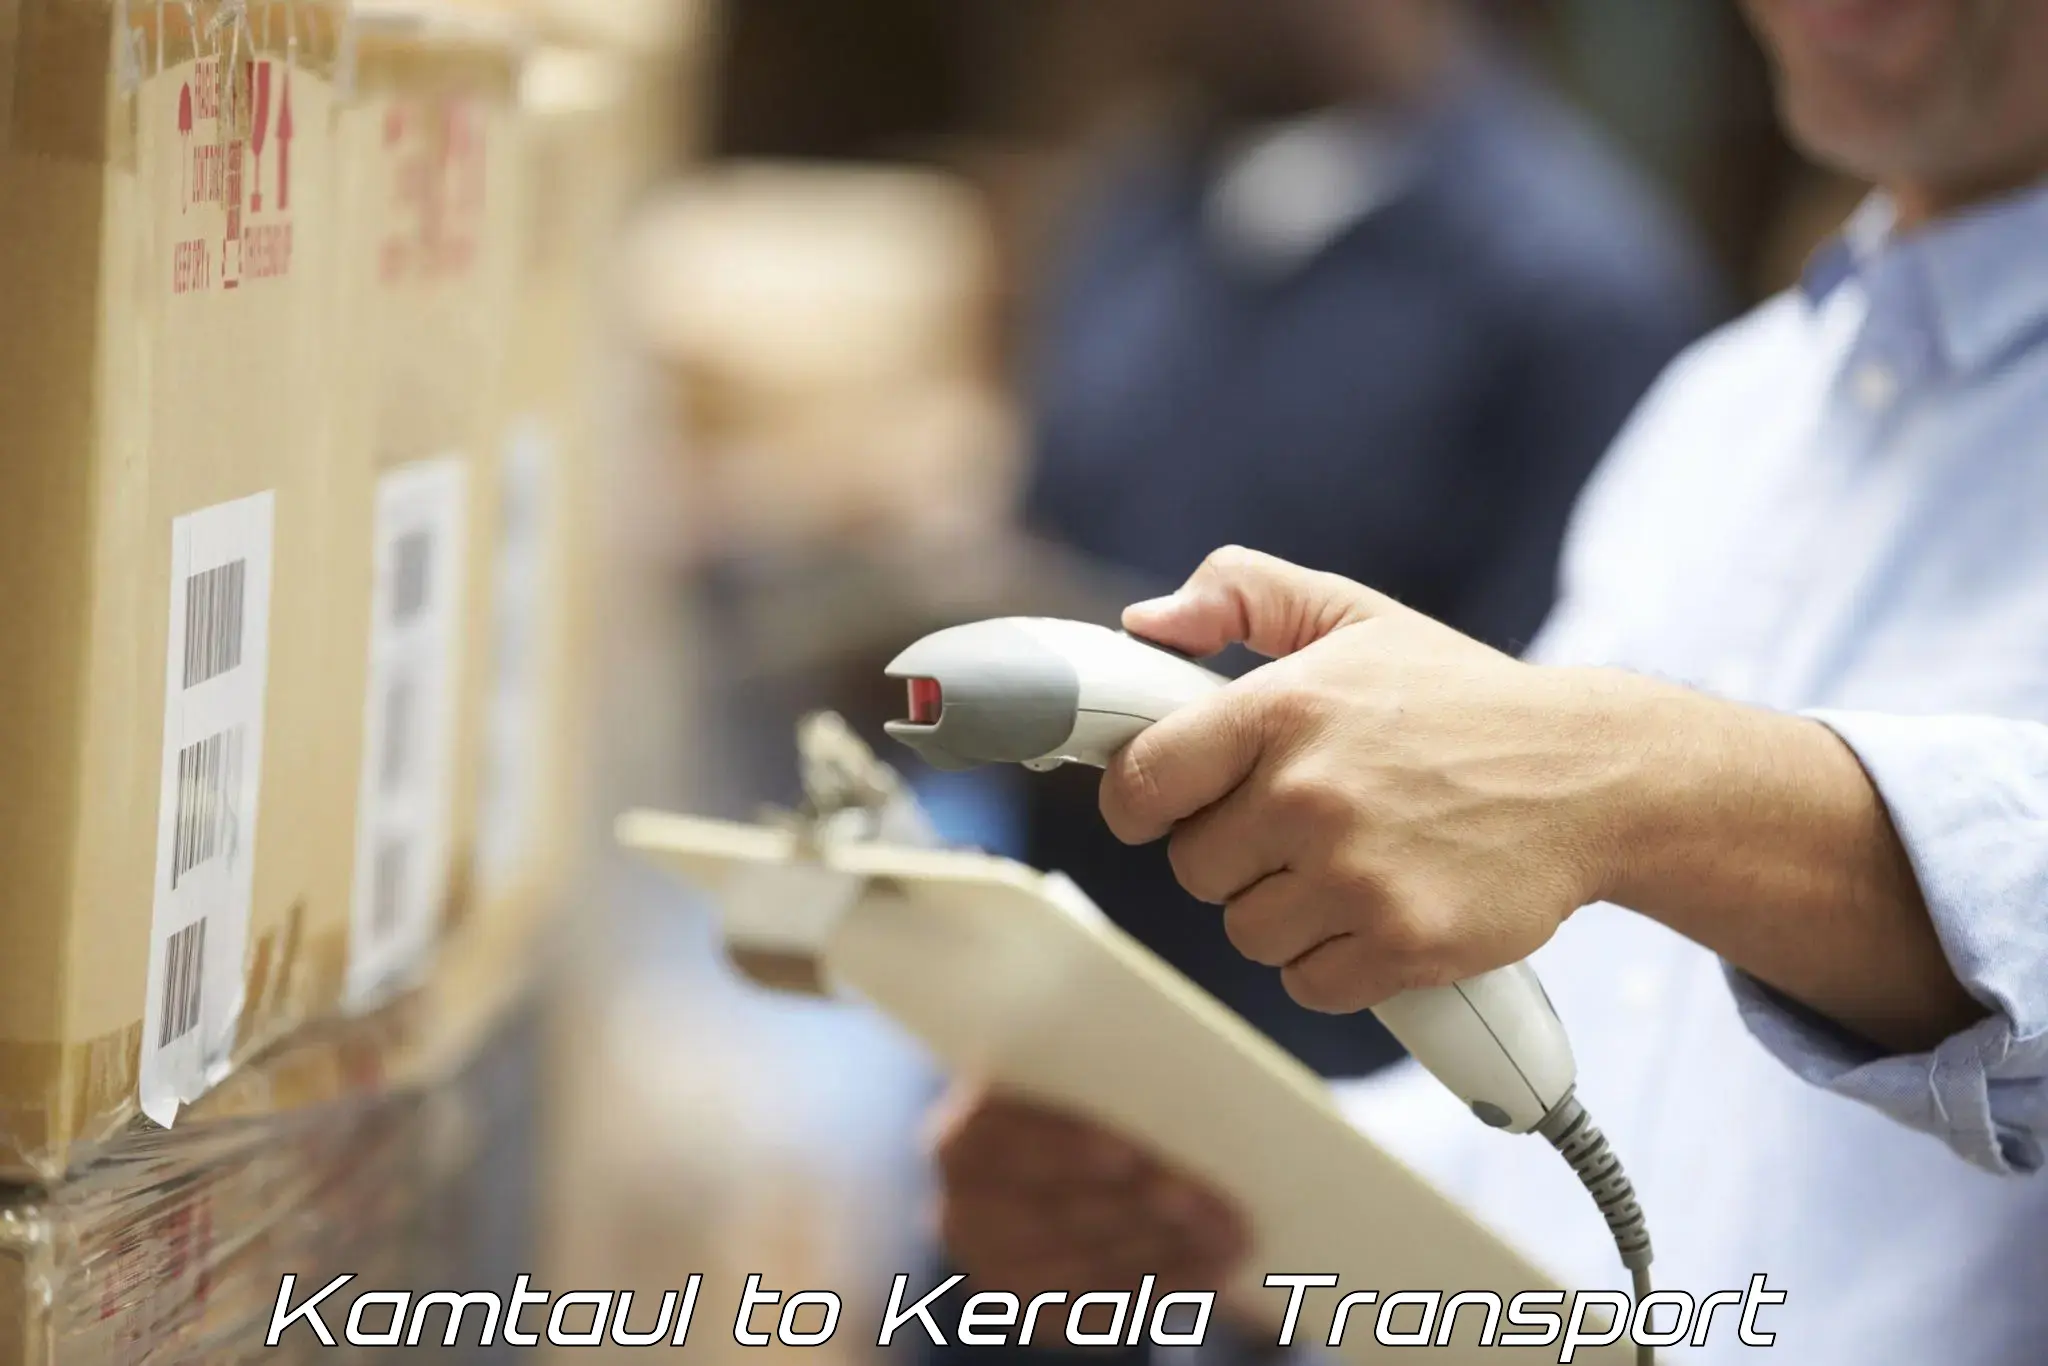 Shipping partner Kamtaul to Vadakara